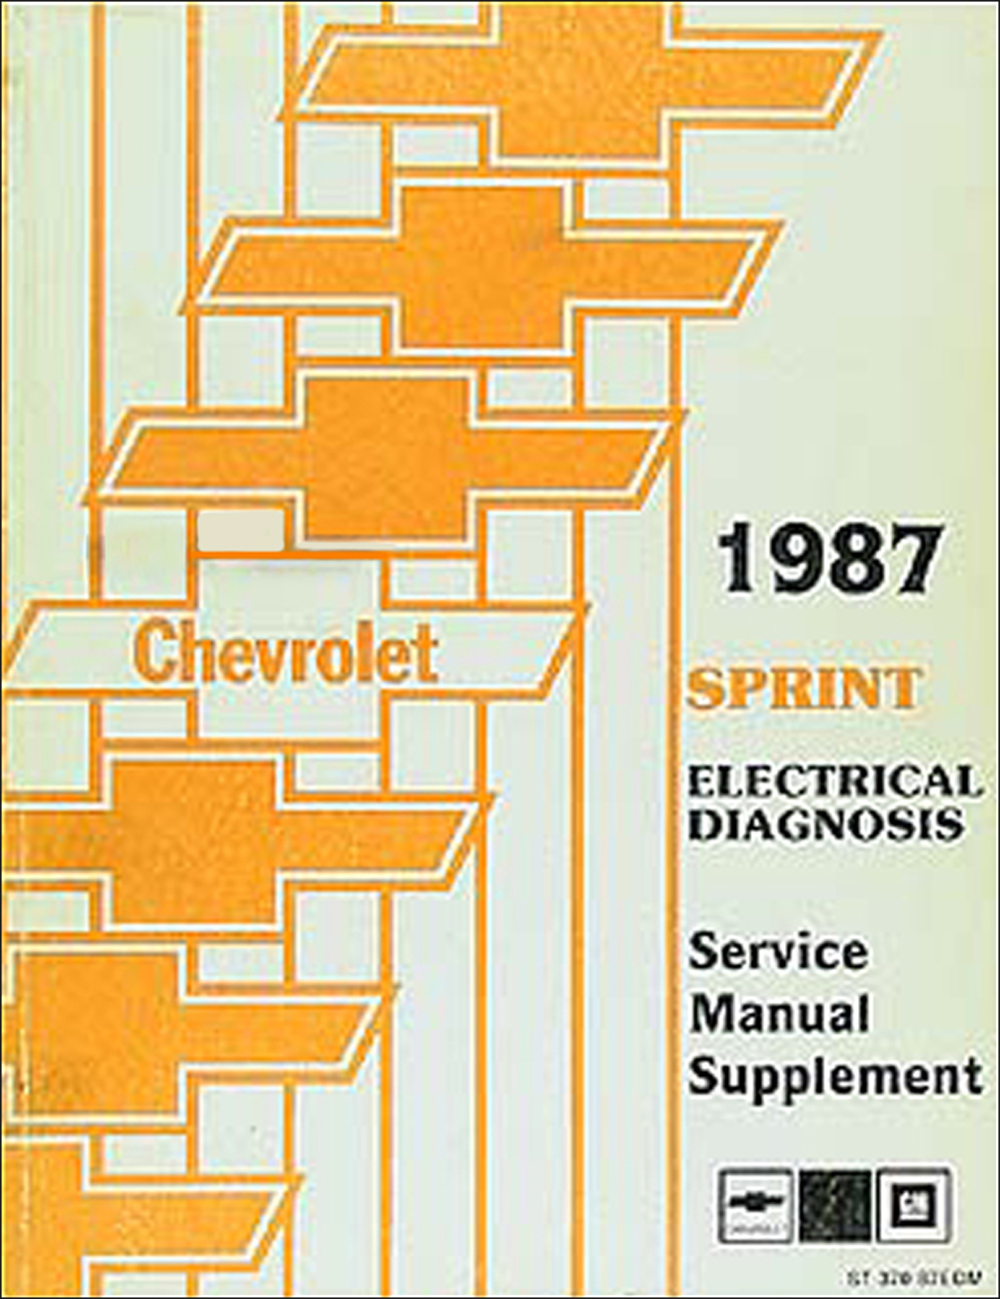 1987 Chevy Sprint Electrical Diagnosis Manual Original 